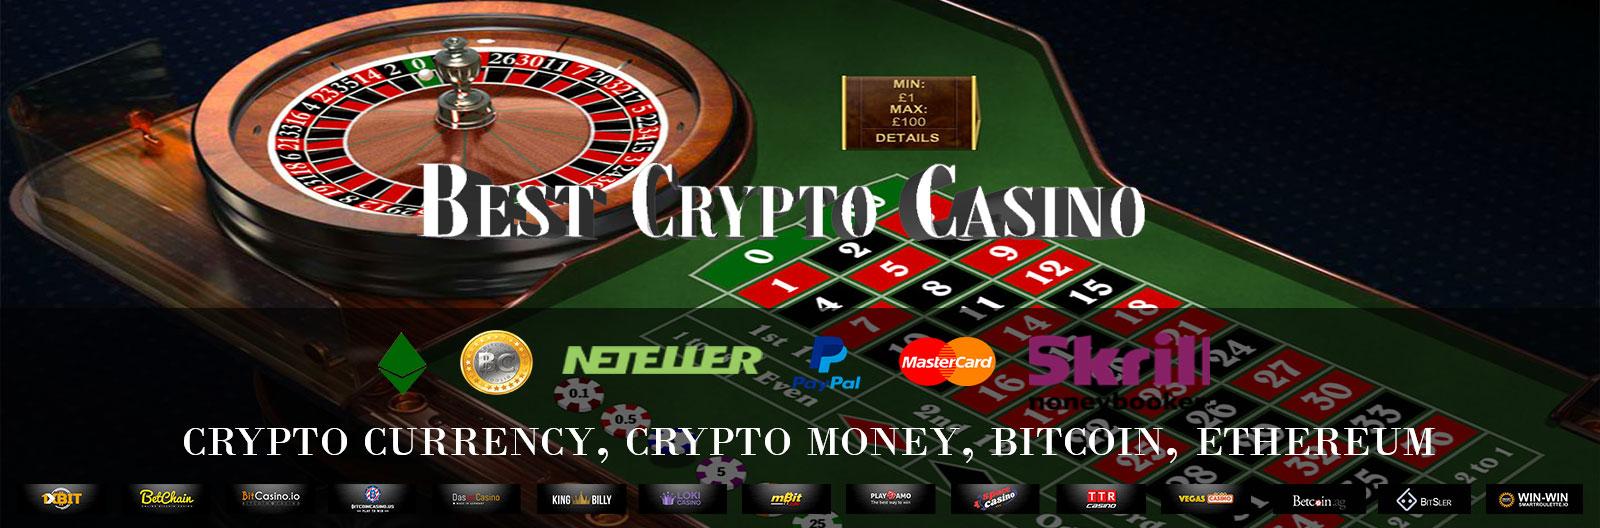 Online bitcoin casinos money laundering